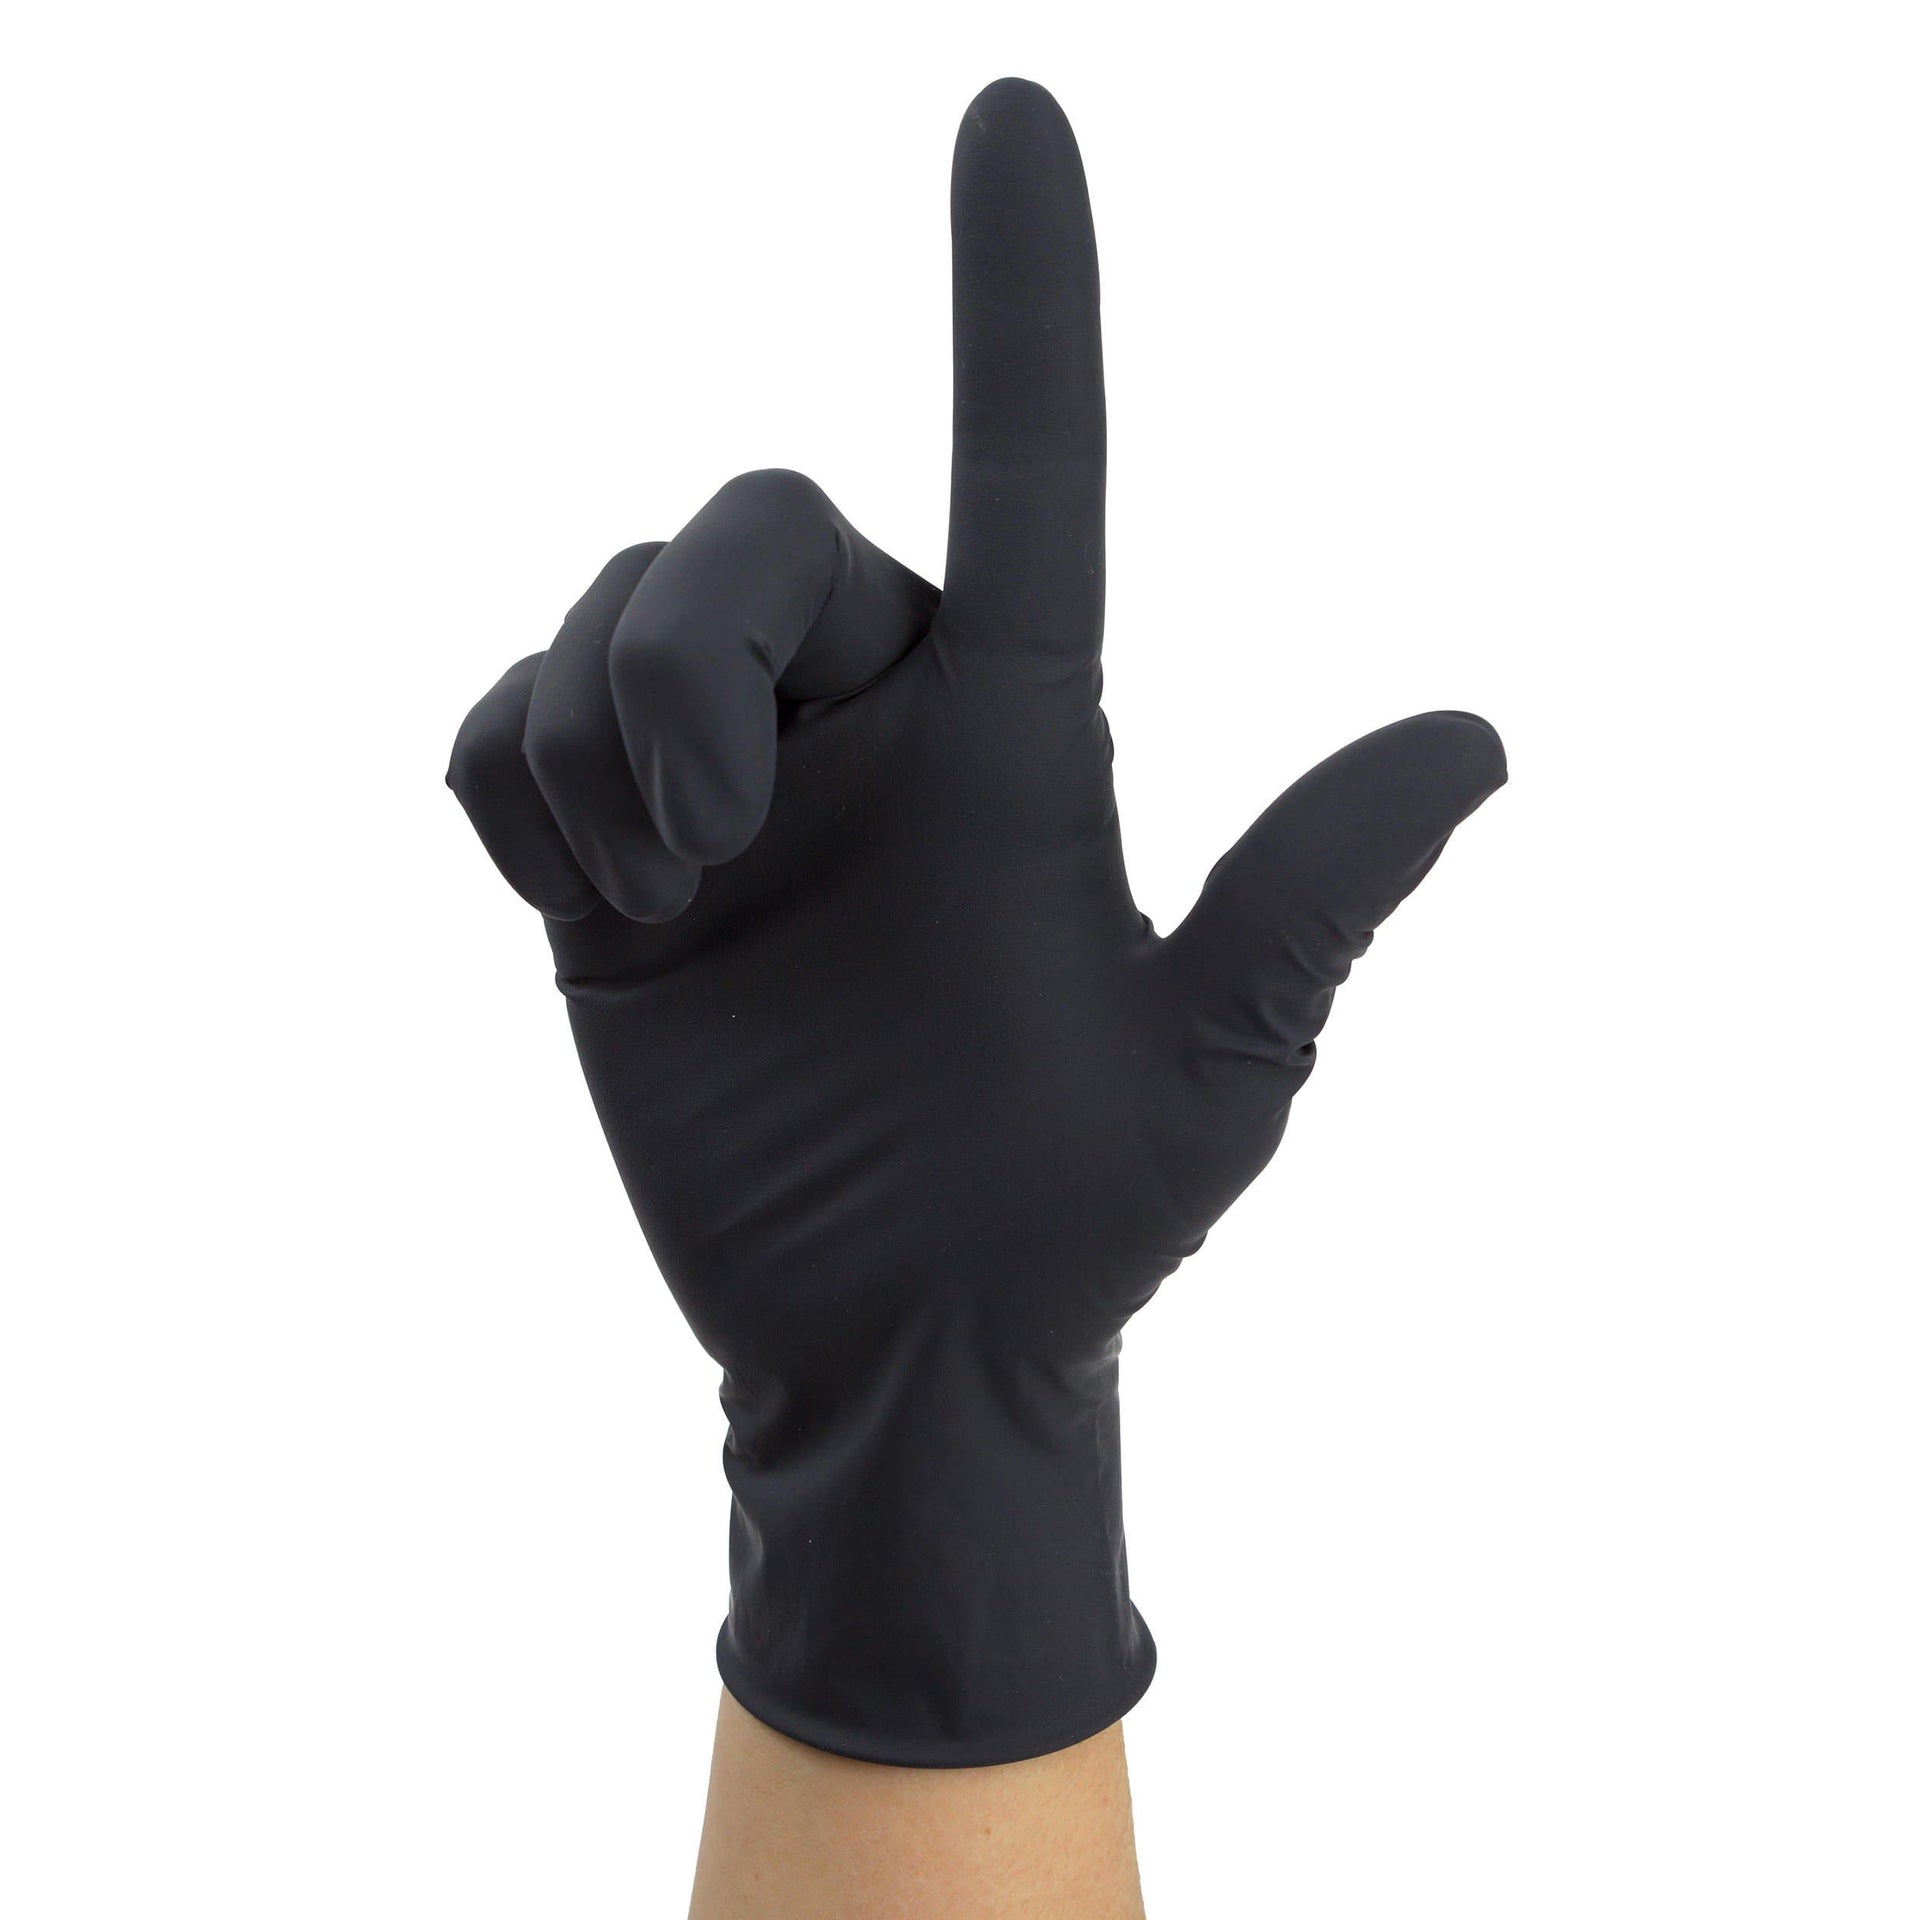 Dynarex Black Arrow Powder-Free Latex Exam Gloves - Senior.com Latex Gloves